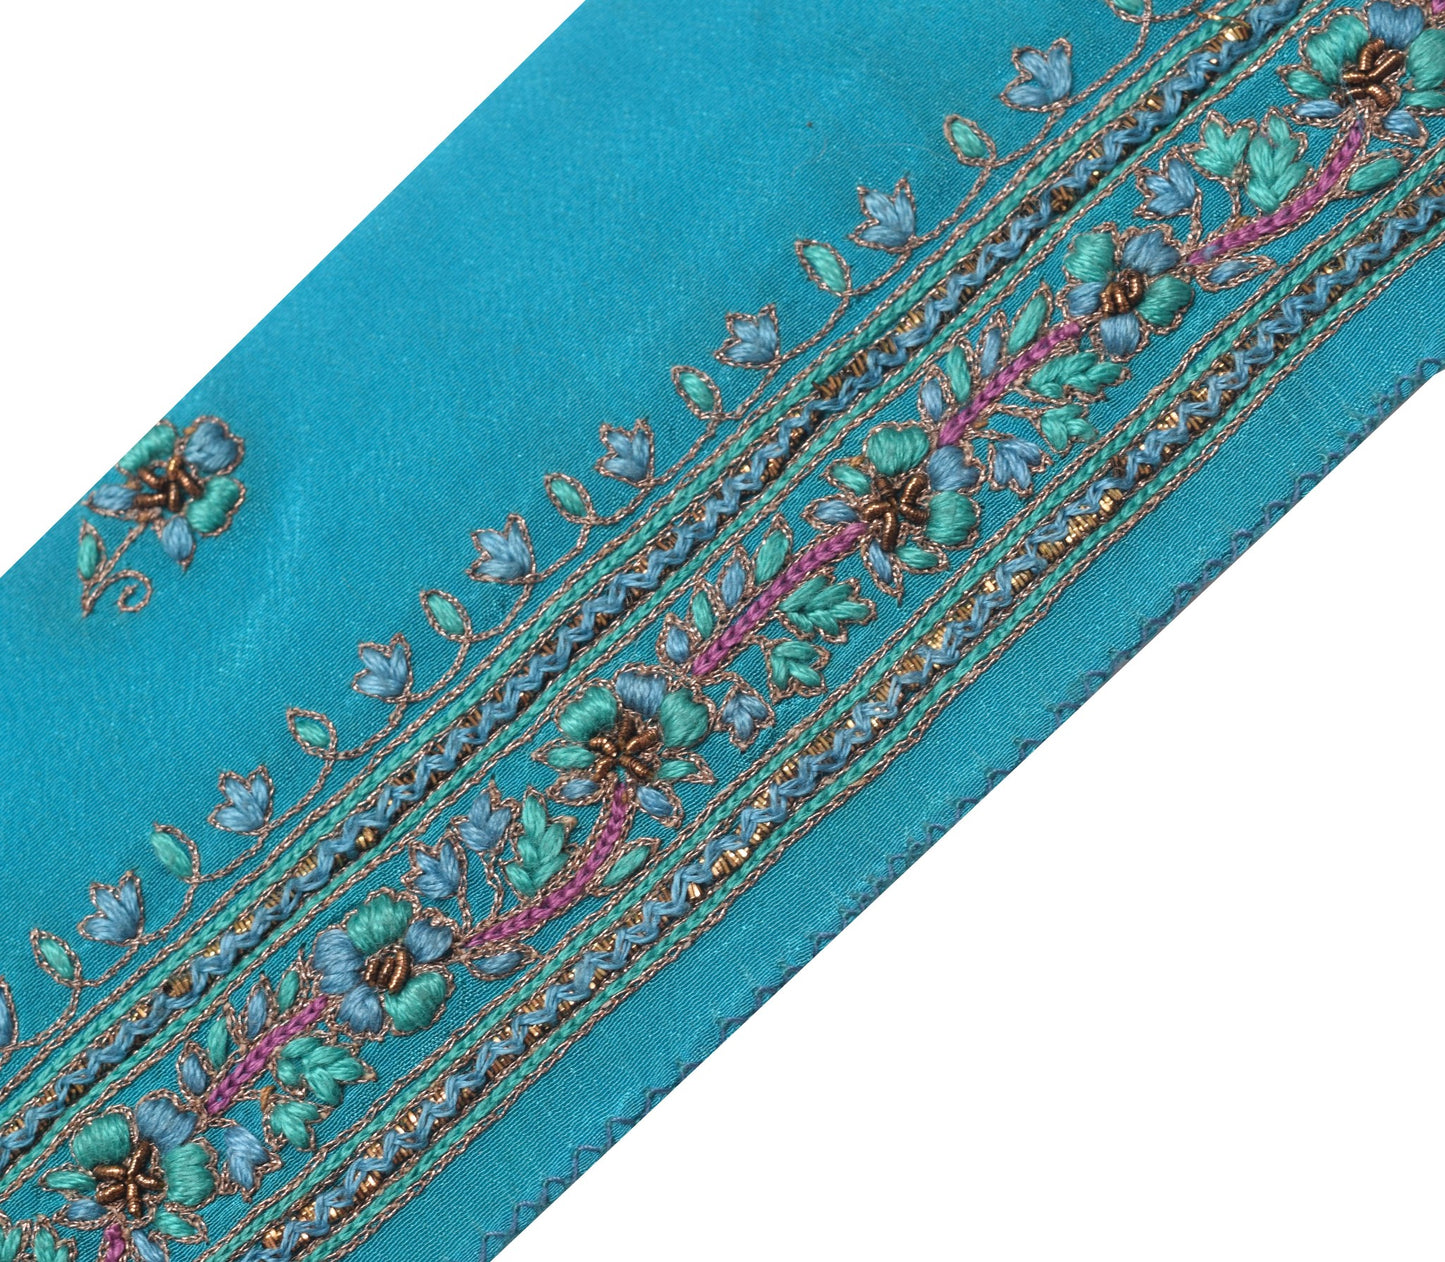 Sushila Vintage Turquoise Saree Border Craft Sewing Trim Embroidered Lace Ribbon